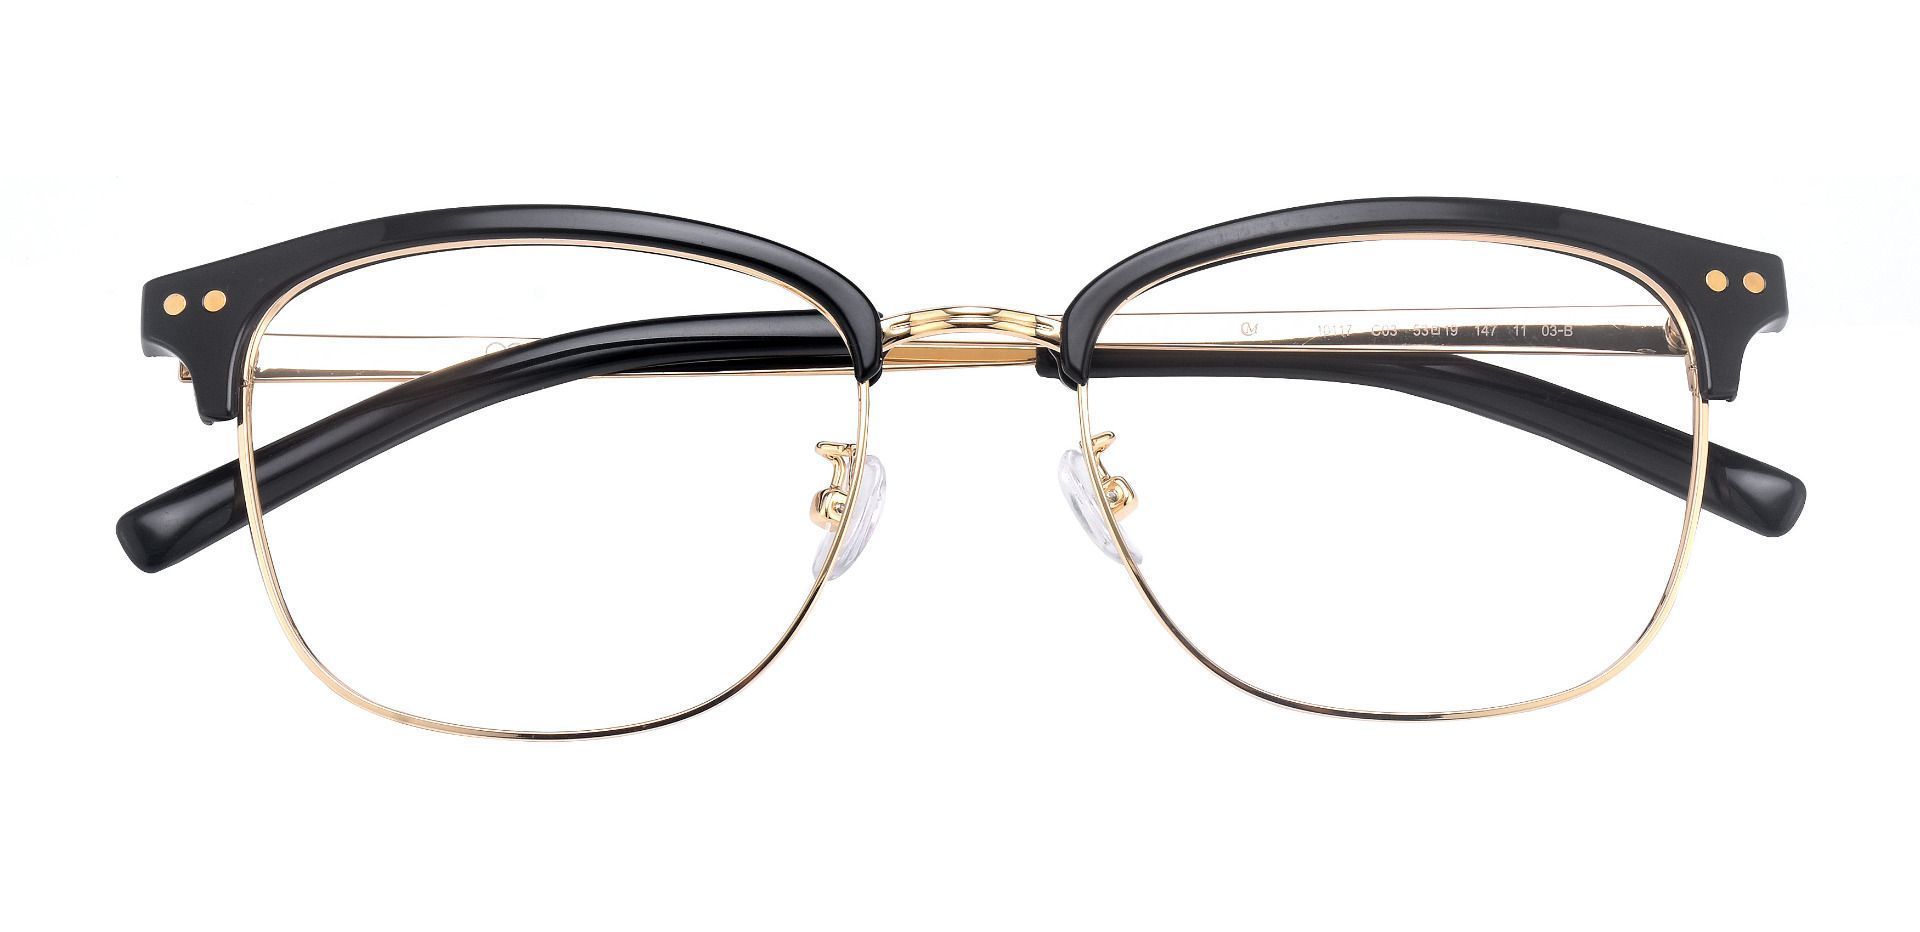 Cutler Browline Prescription Glasses Black Men S Eyeglasses Payne Glasses